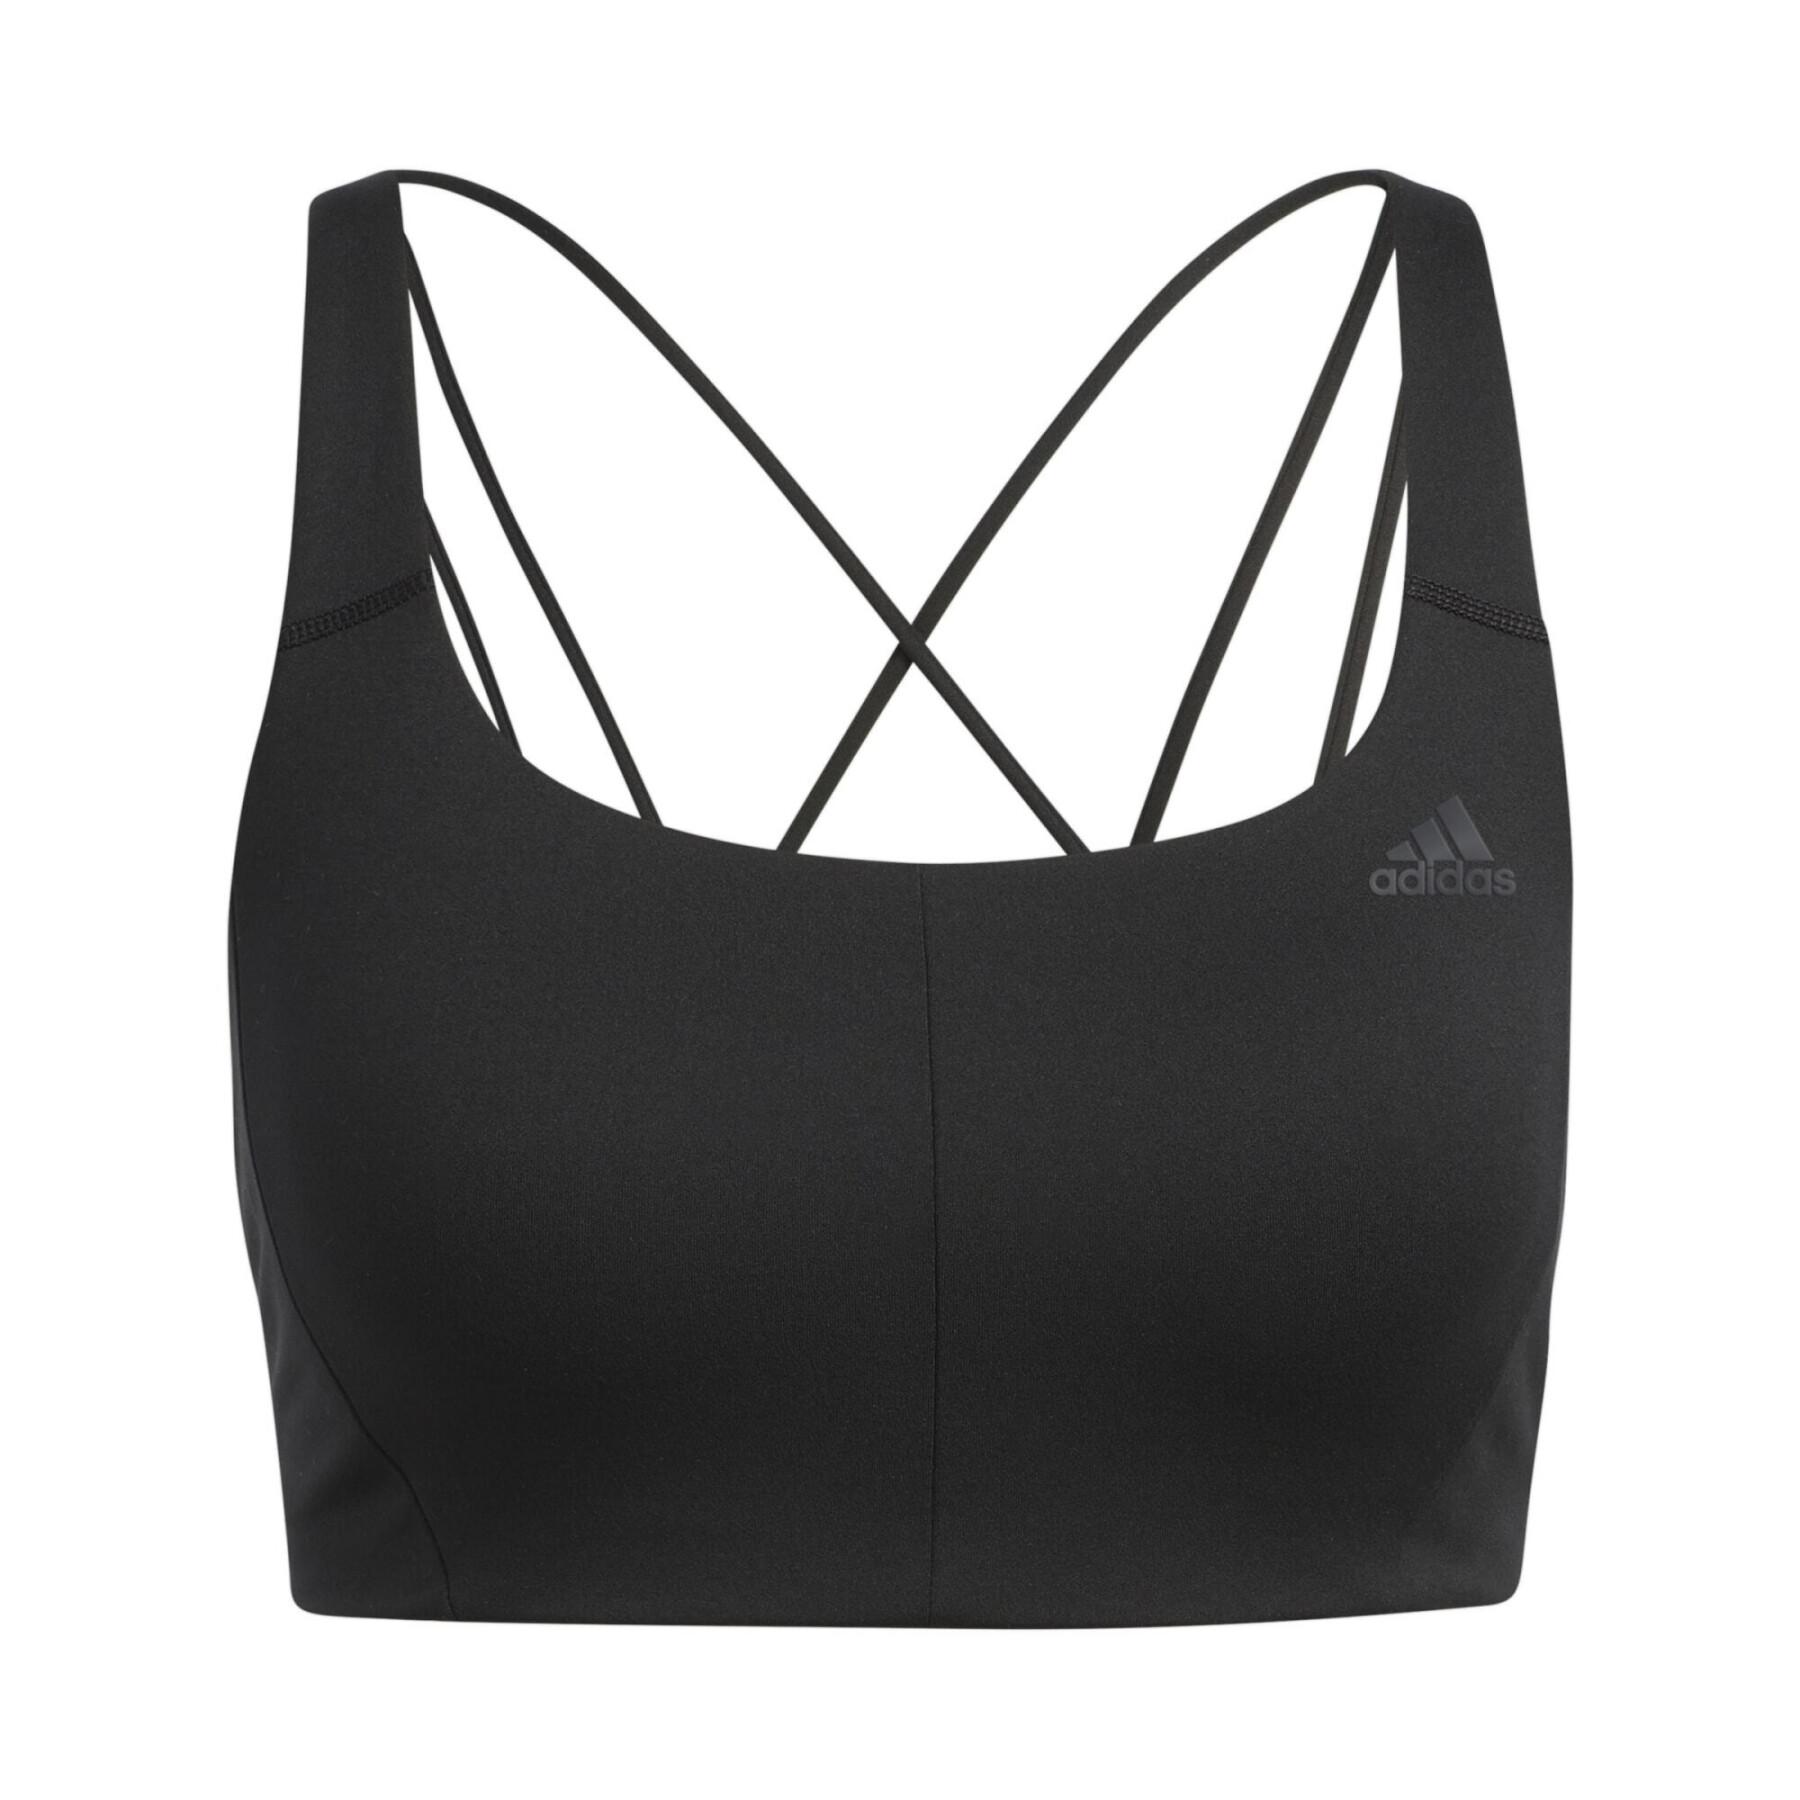 Medium support bra for women adidas CoreFlow - Bras - Women's